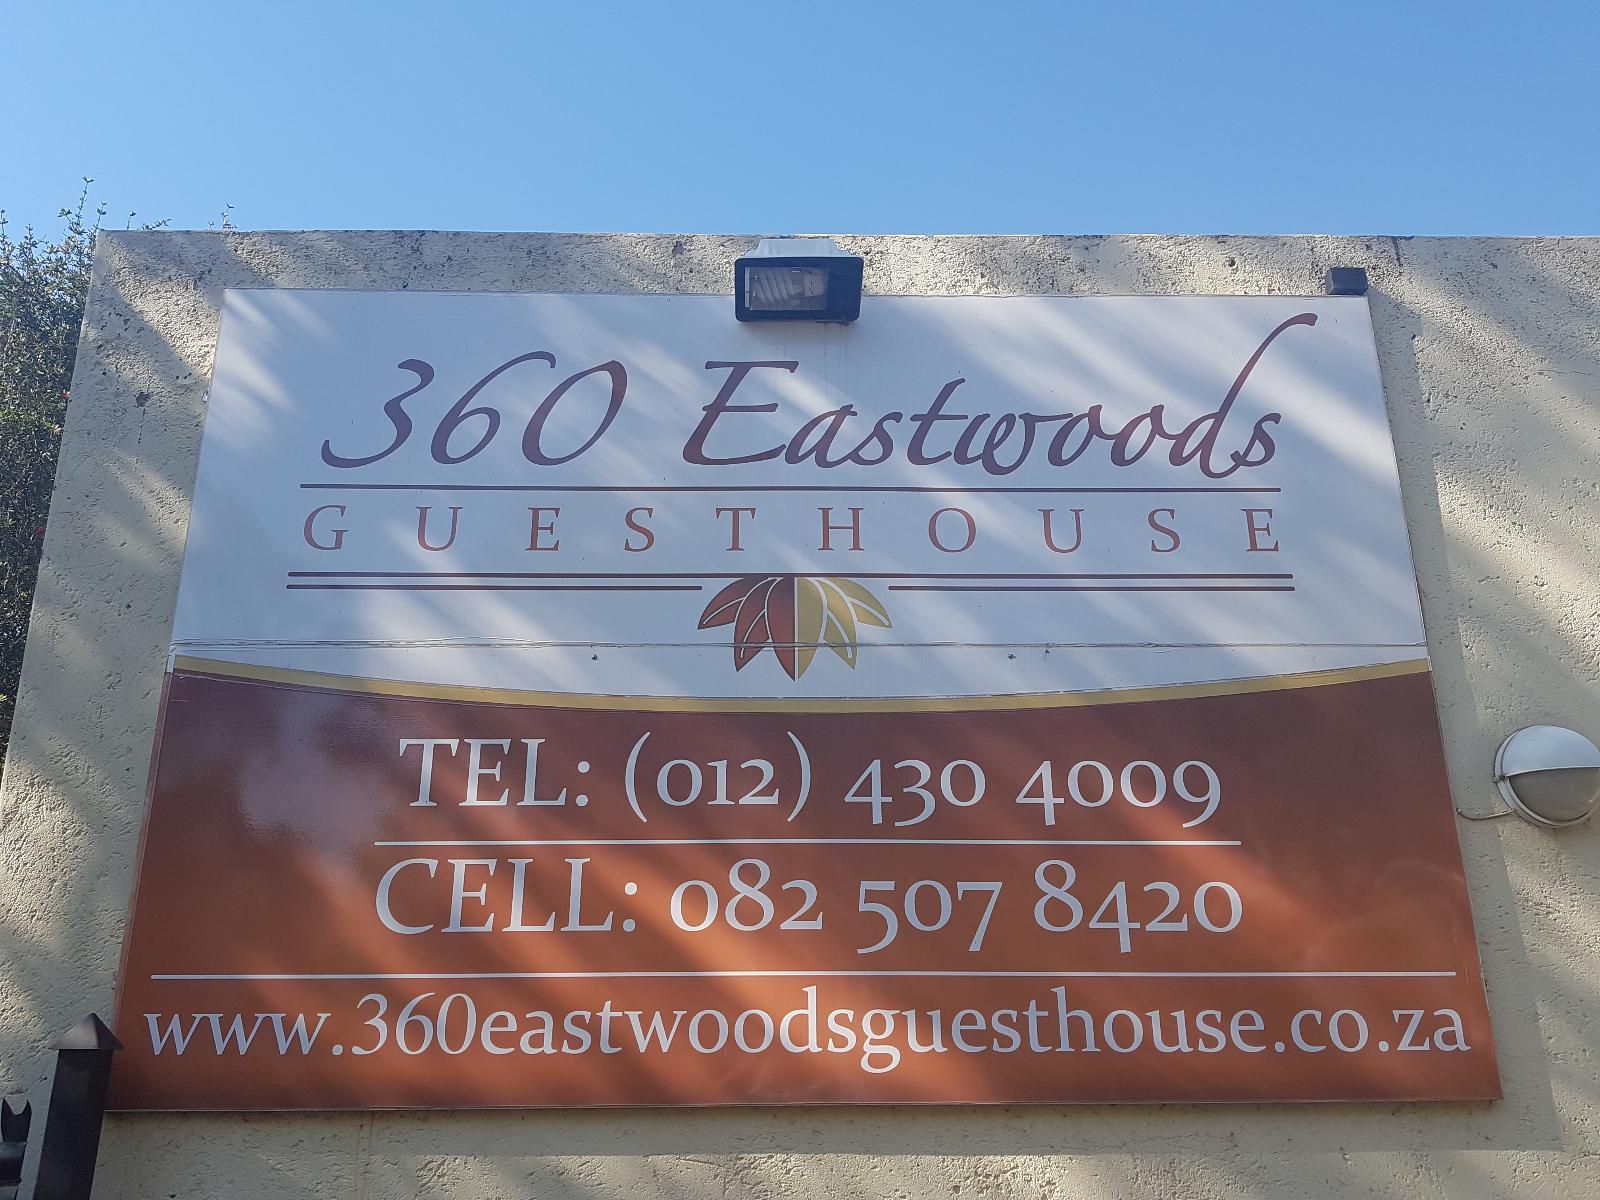 360 Eastwoods Guest House Arcadia Pretoria Tshwane Gauteng South Africa Sign, Text